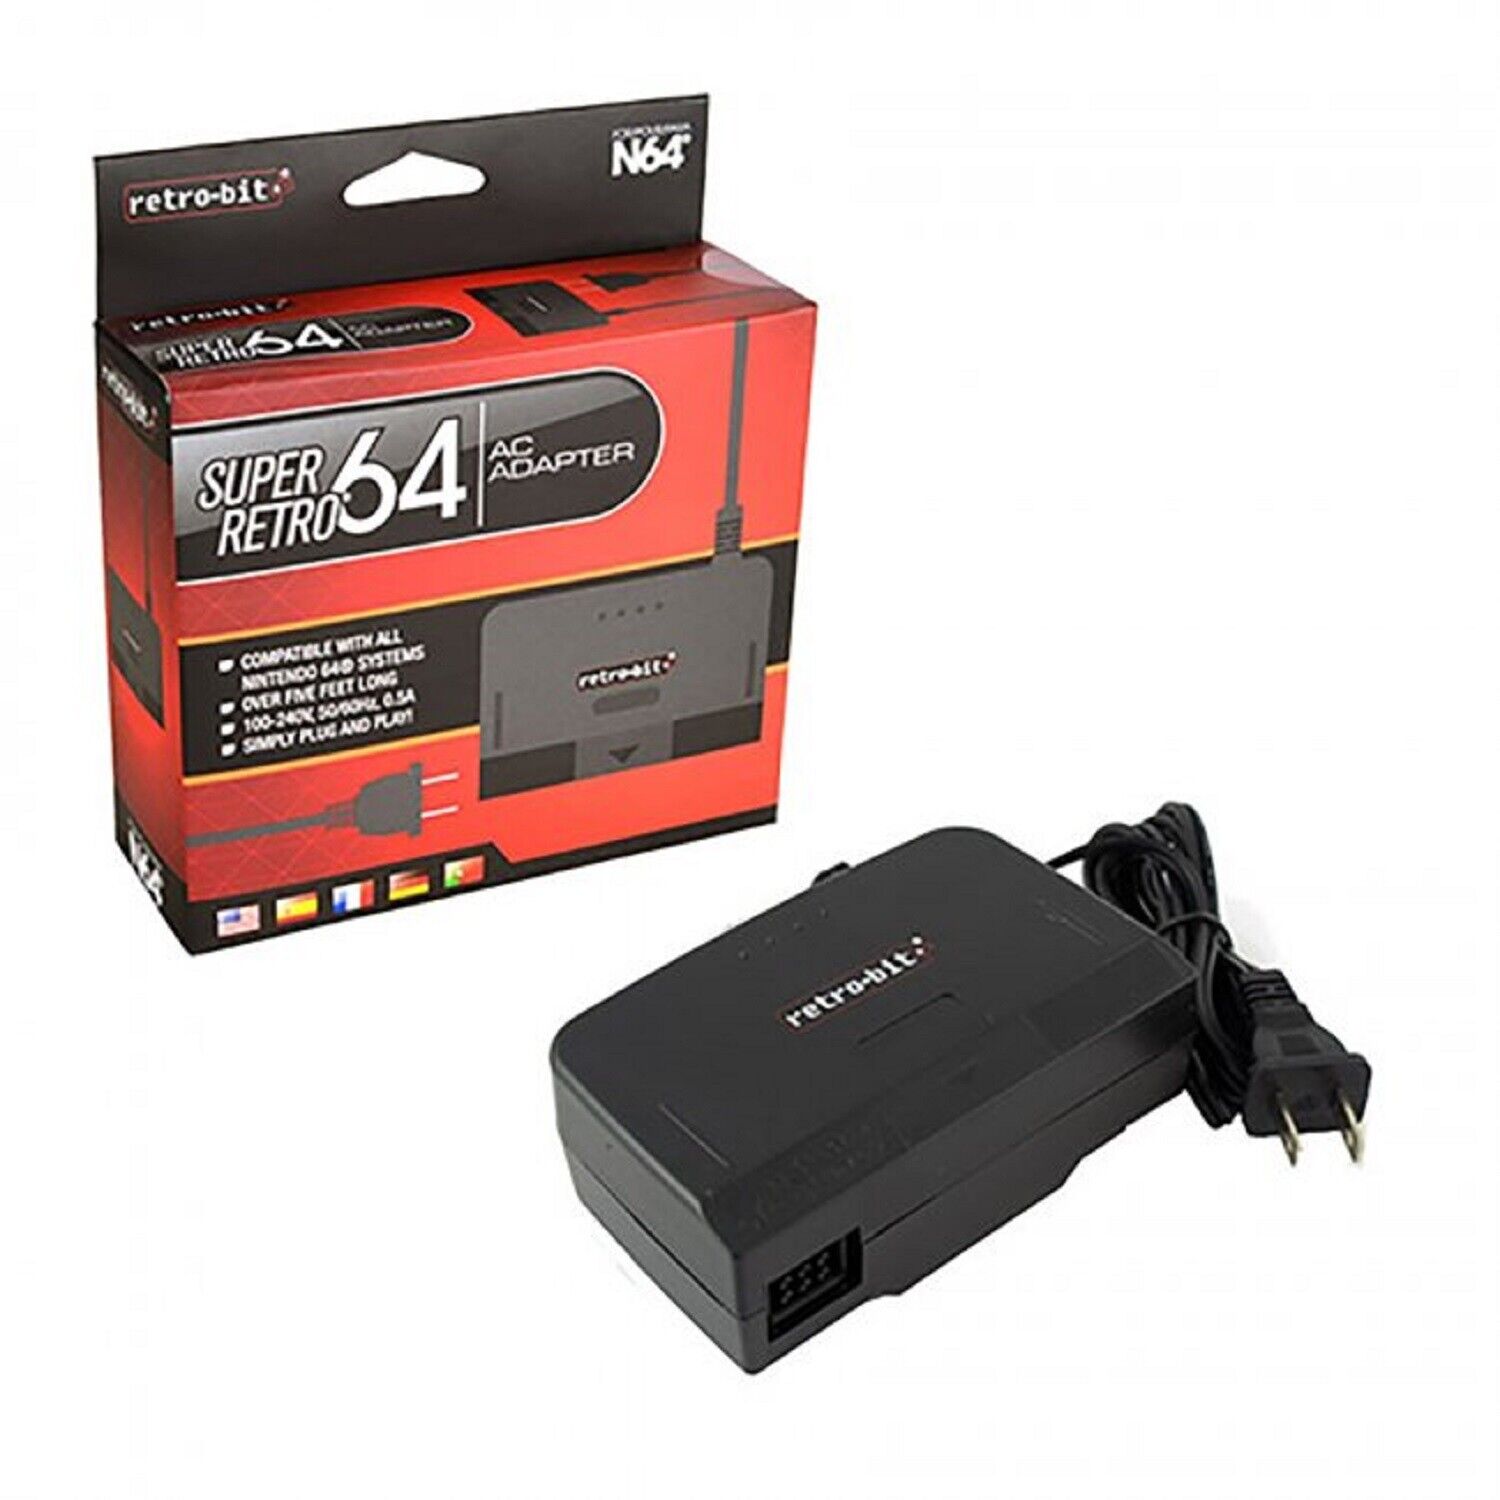 AC ADAPTER POWER SUPPLY CORD (NINTENDO 64) (NEW) N64 IN BOX MPN N64-AC Compatible Model For Nintendo 64 Platform Ninten